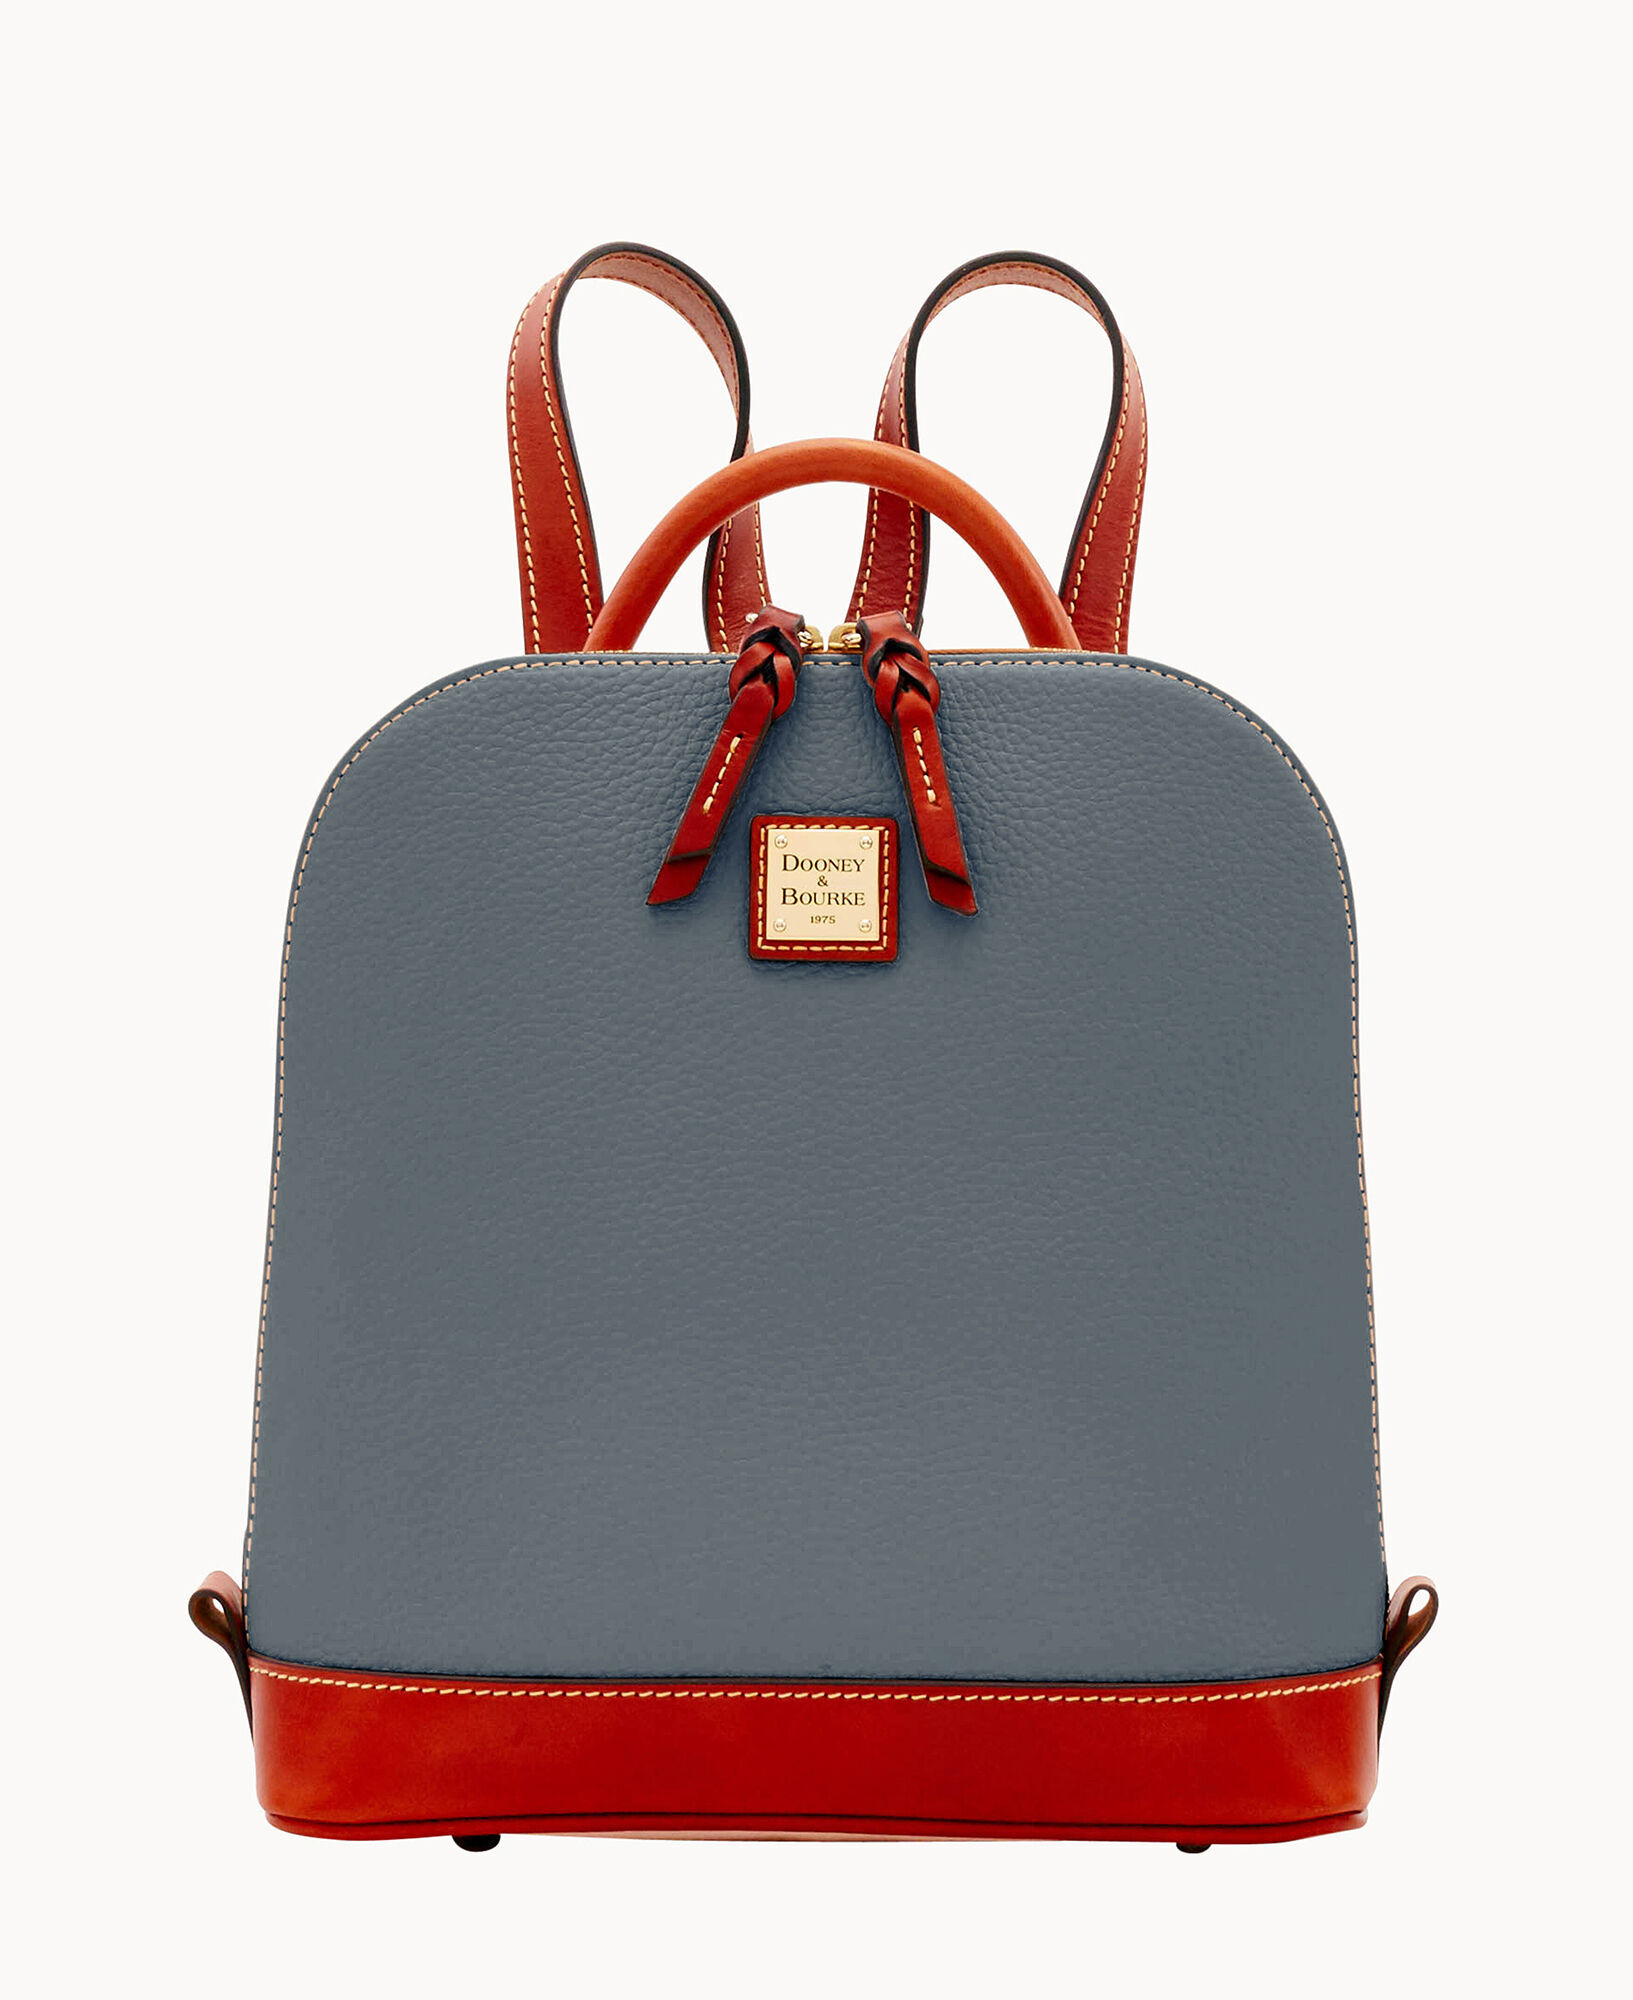 Dooney & Bourke Gretta Small Zip Pod Backpack